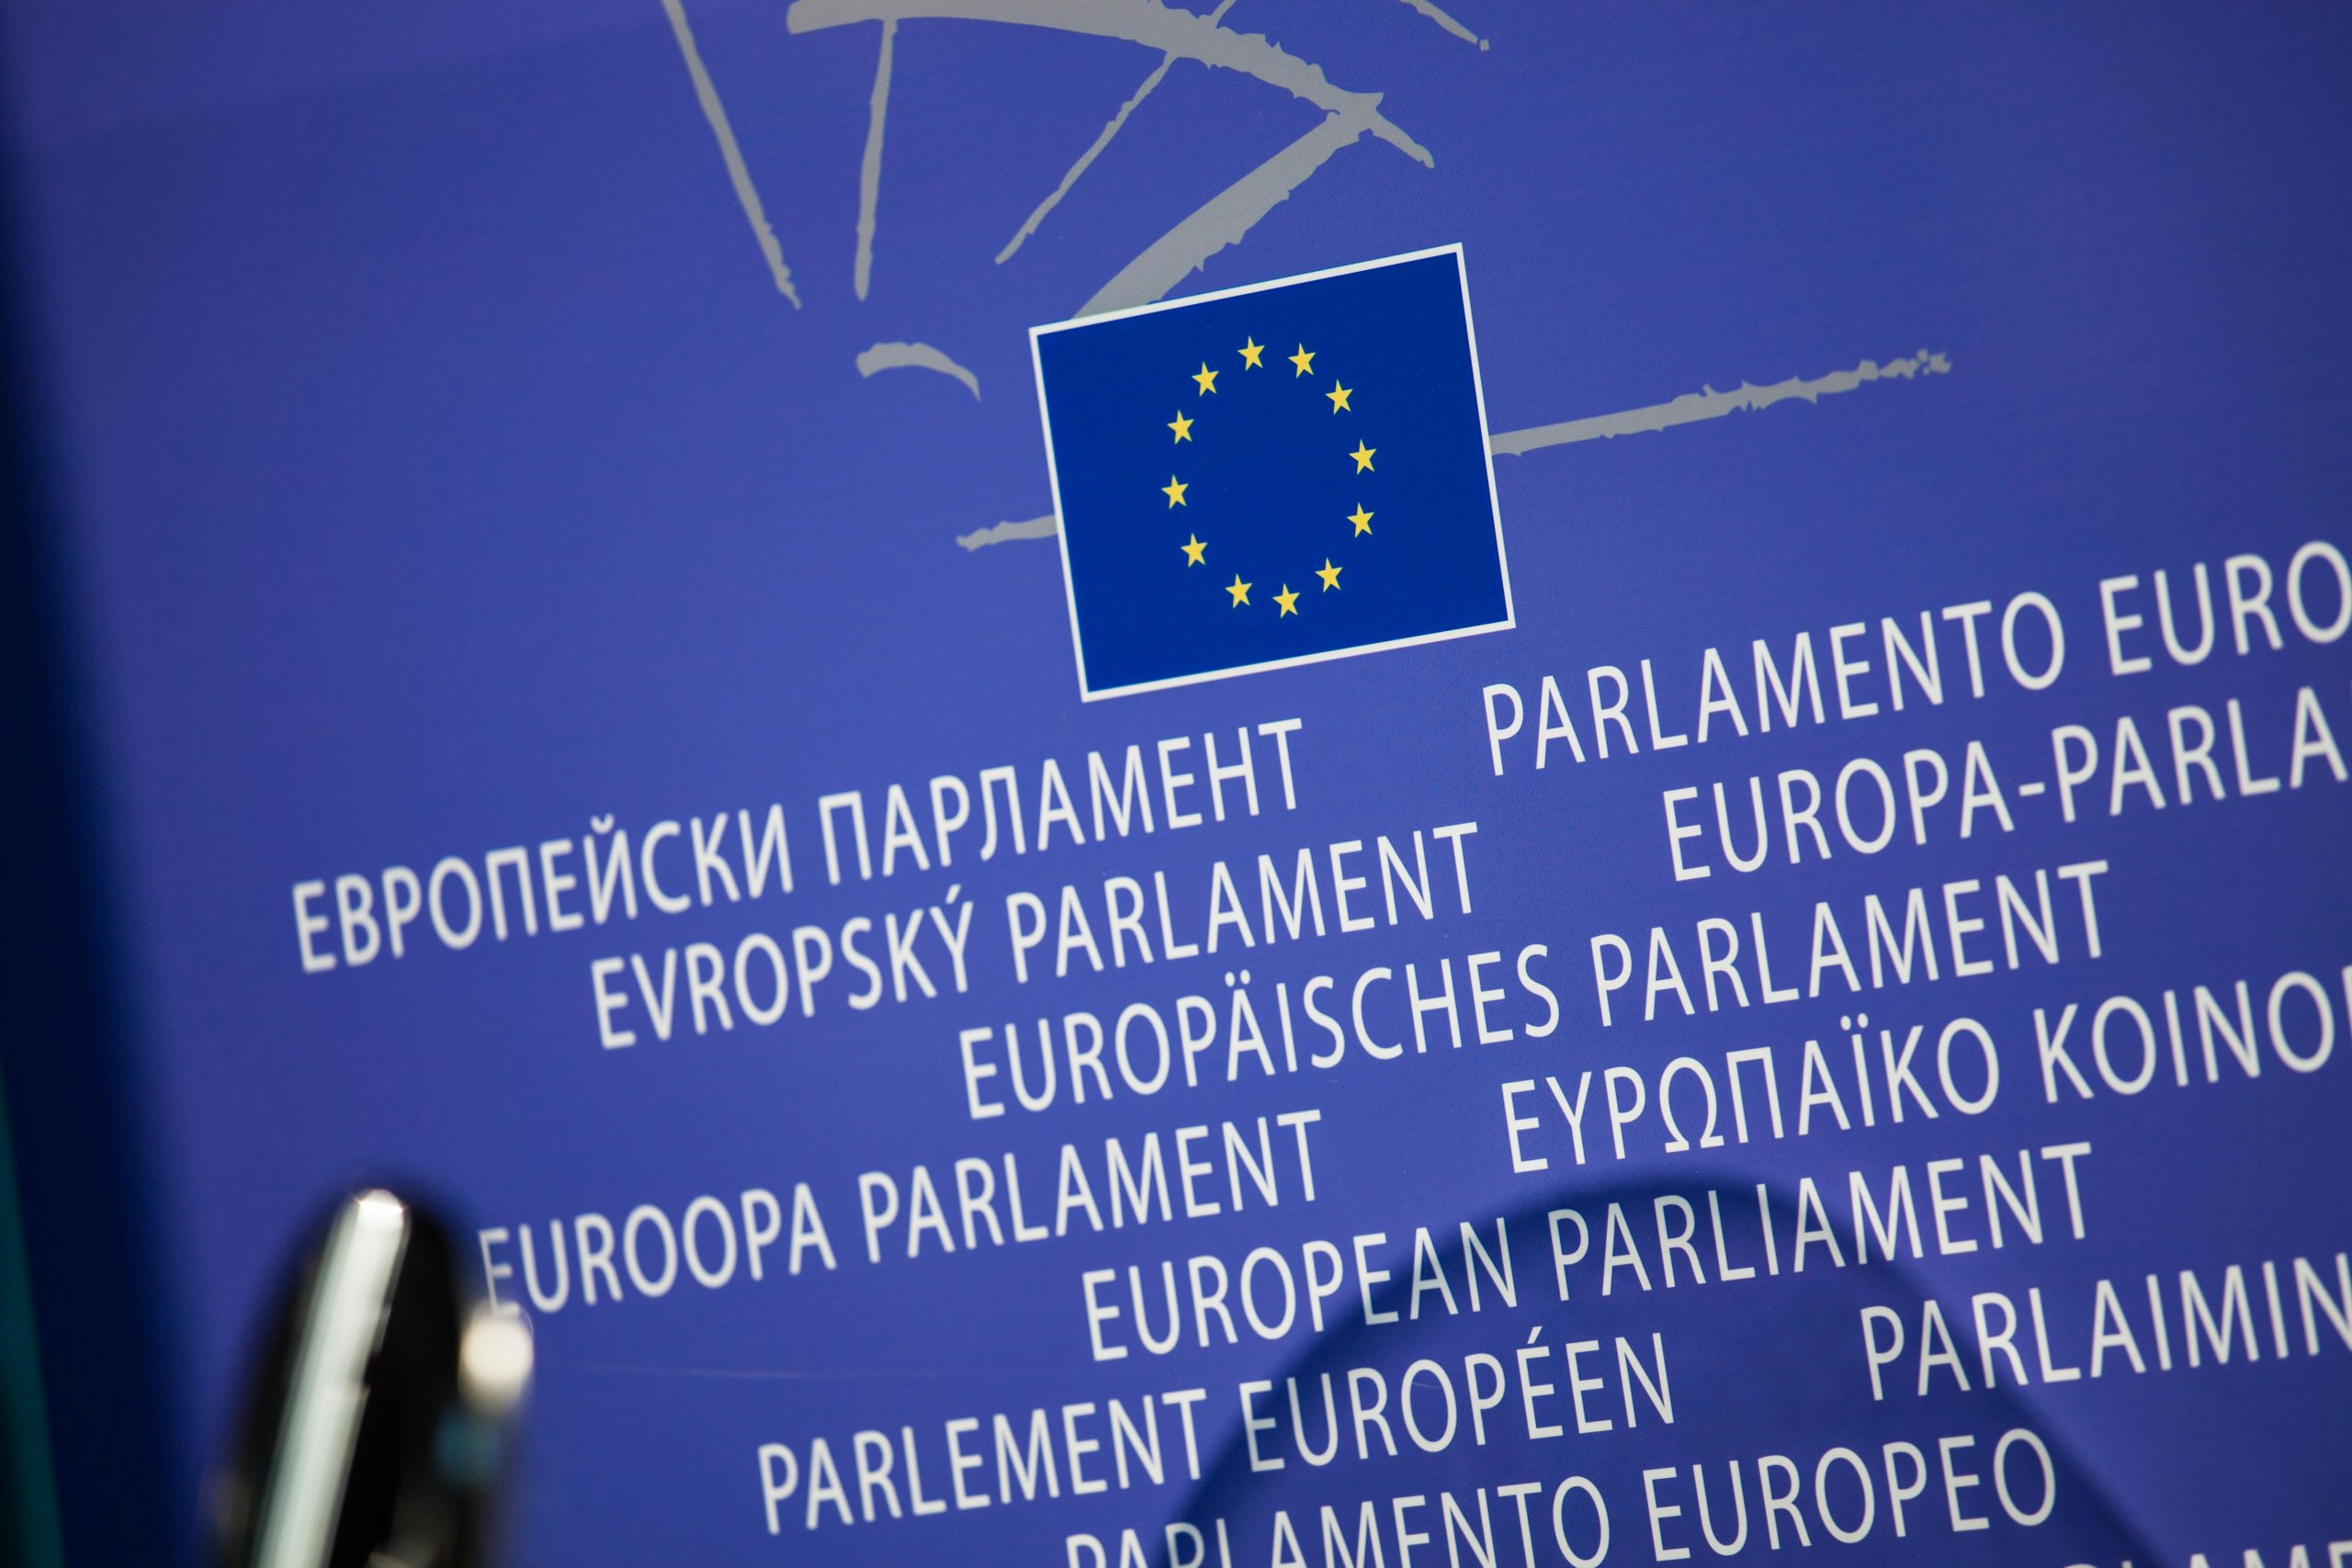 European Parliament's names in several EU languages under the flag of the European Union.